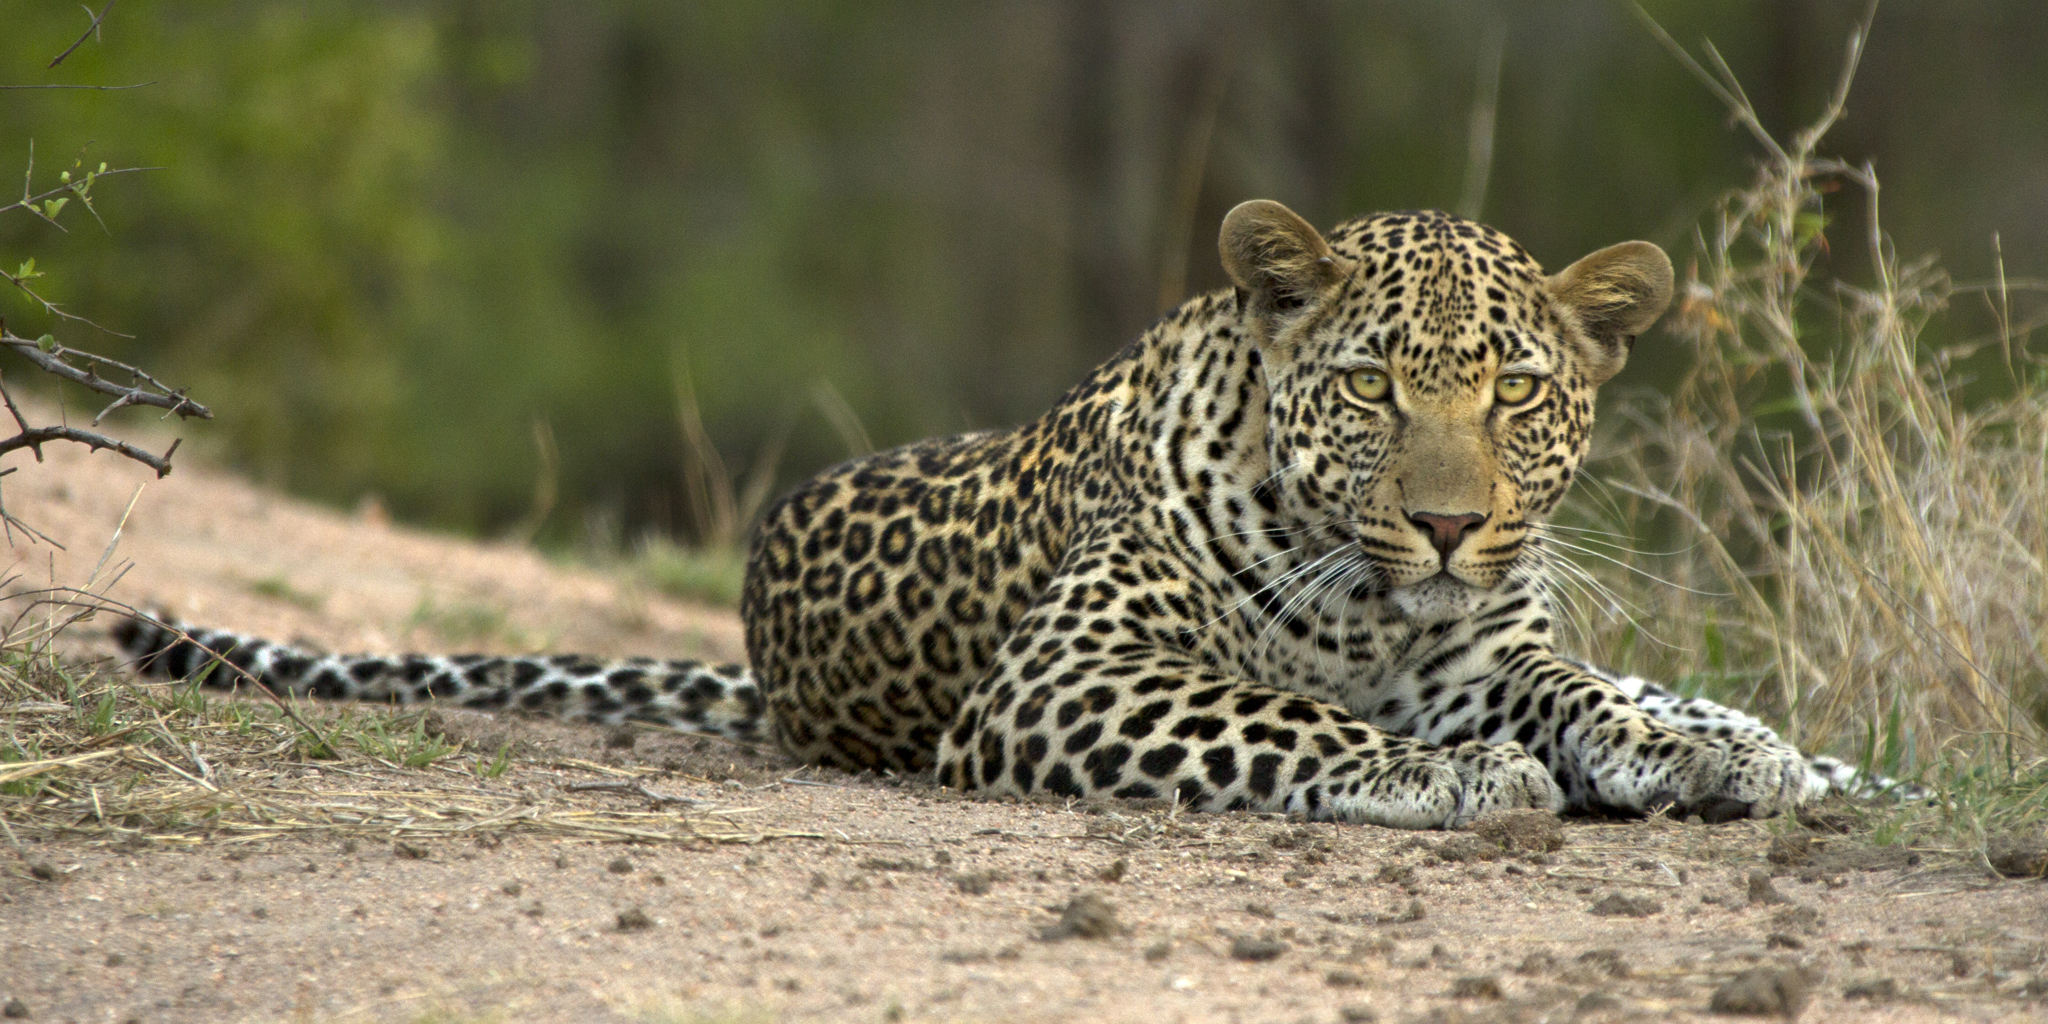 leopard safaris, luangwa areas and experiences, zambia